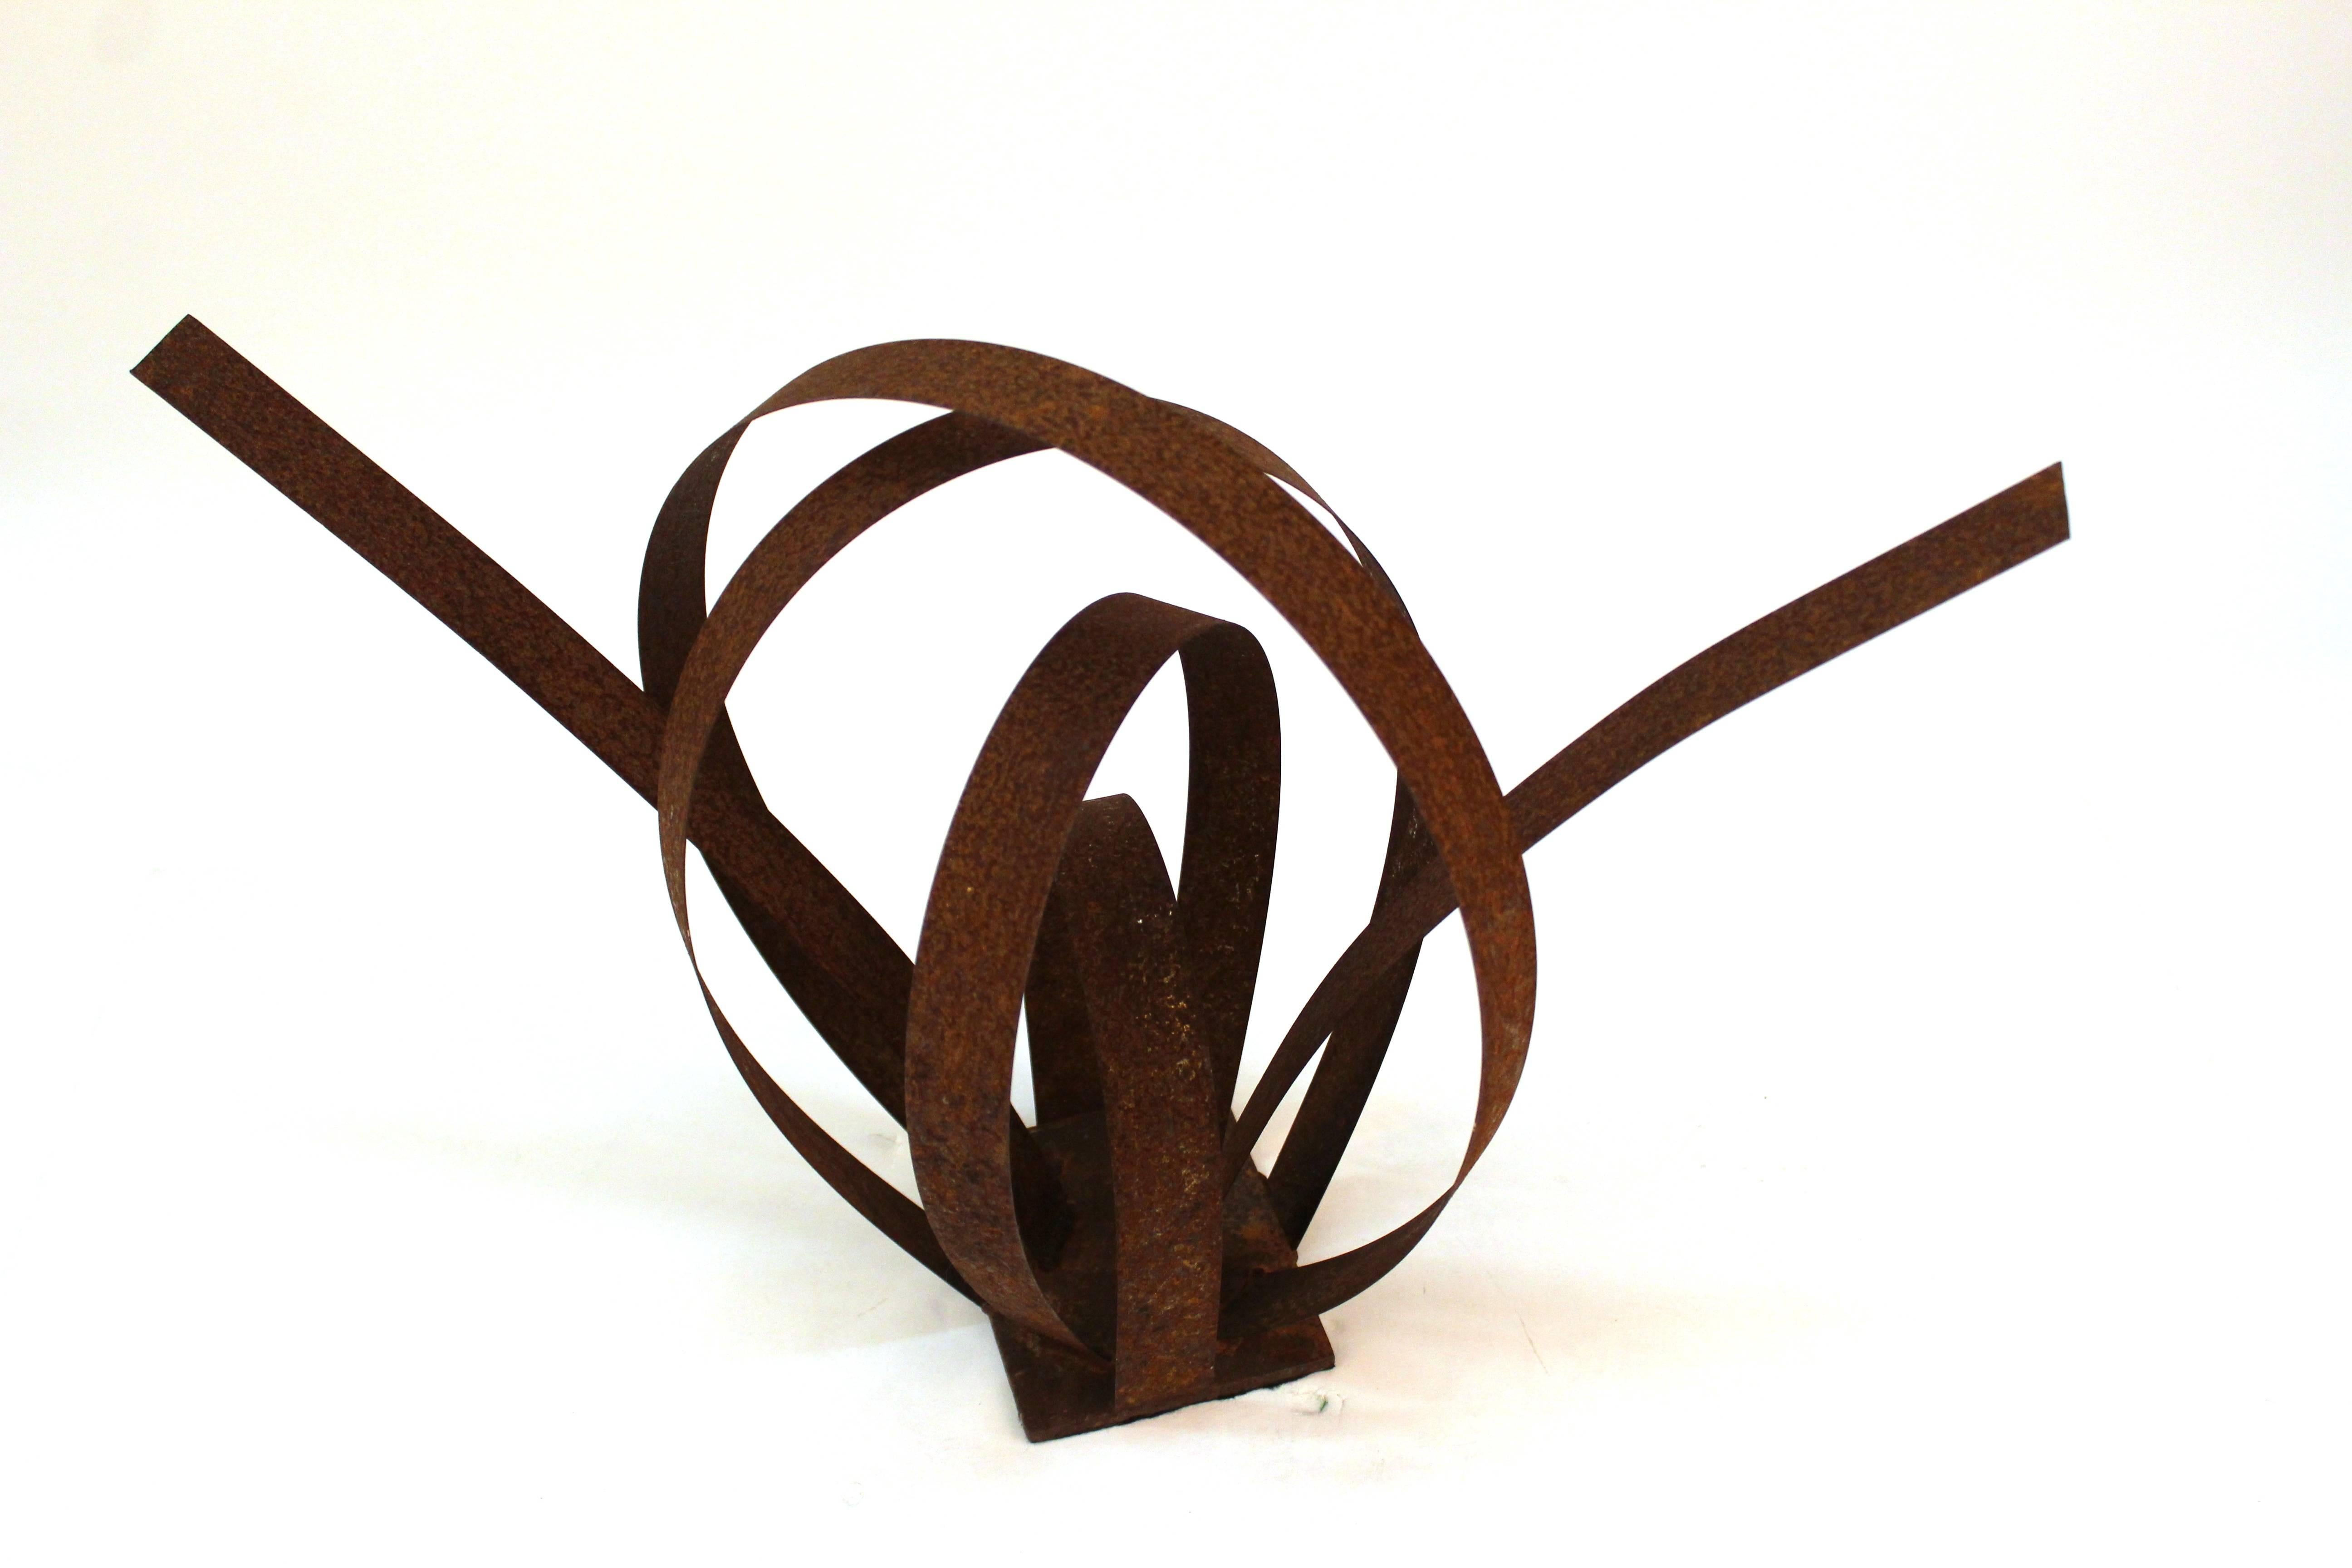 20th Century Abstract Loop Metal Sculpture